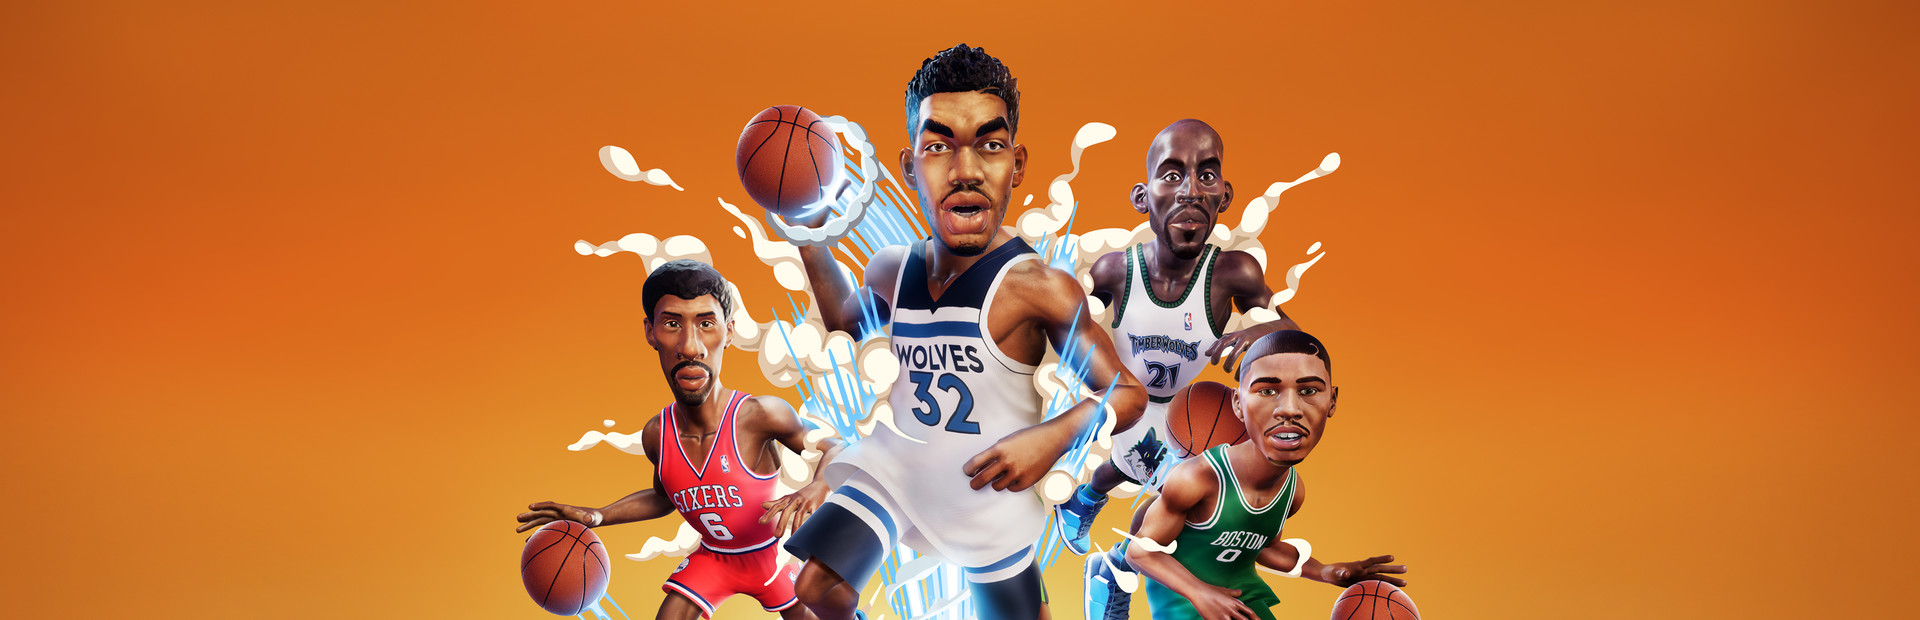 NBA 2K Playgrounds 2 cover image